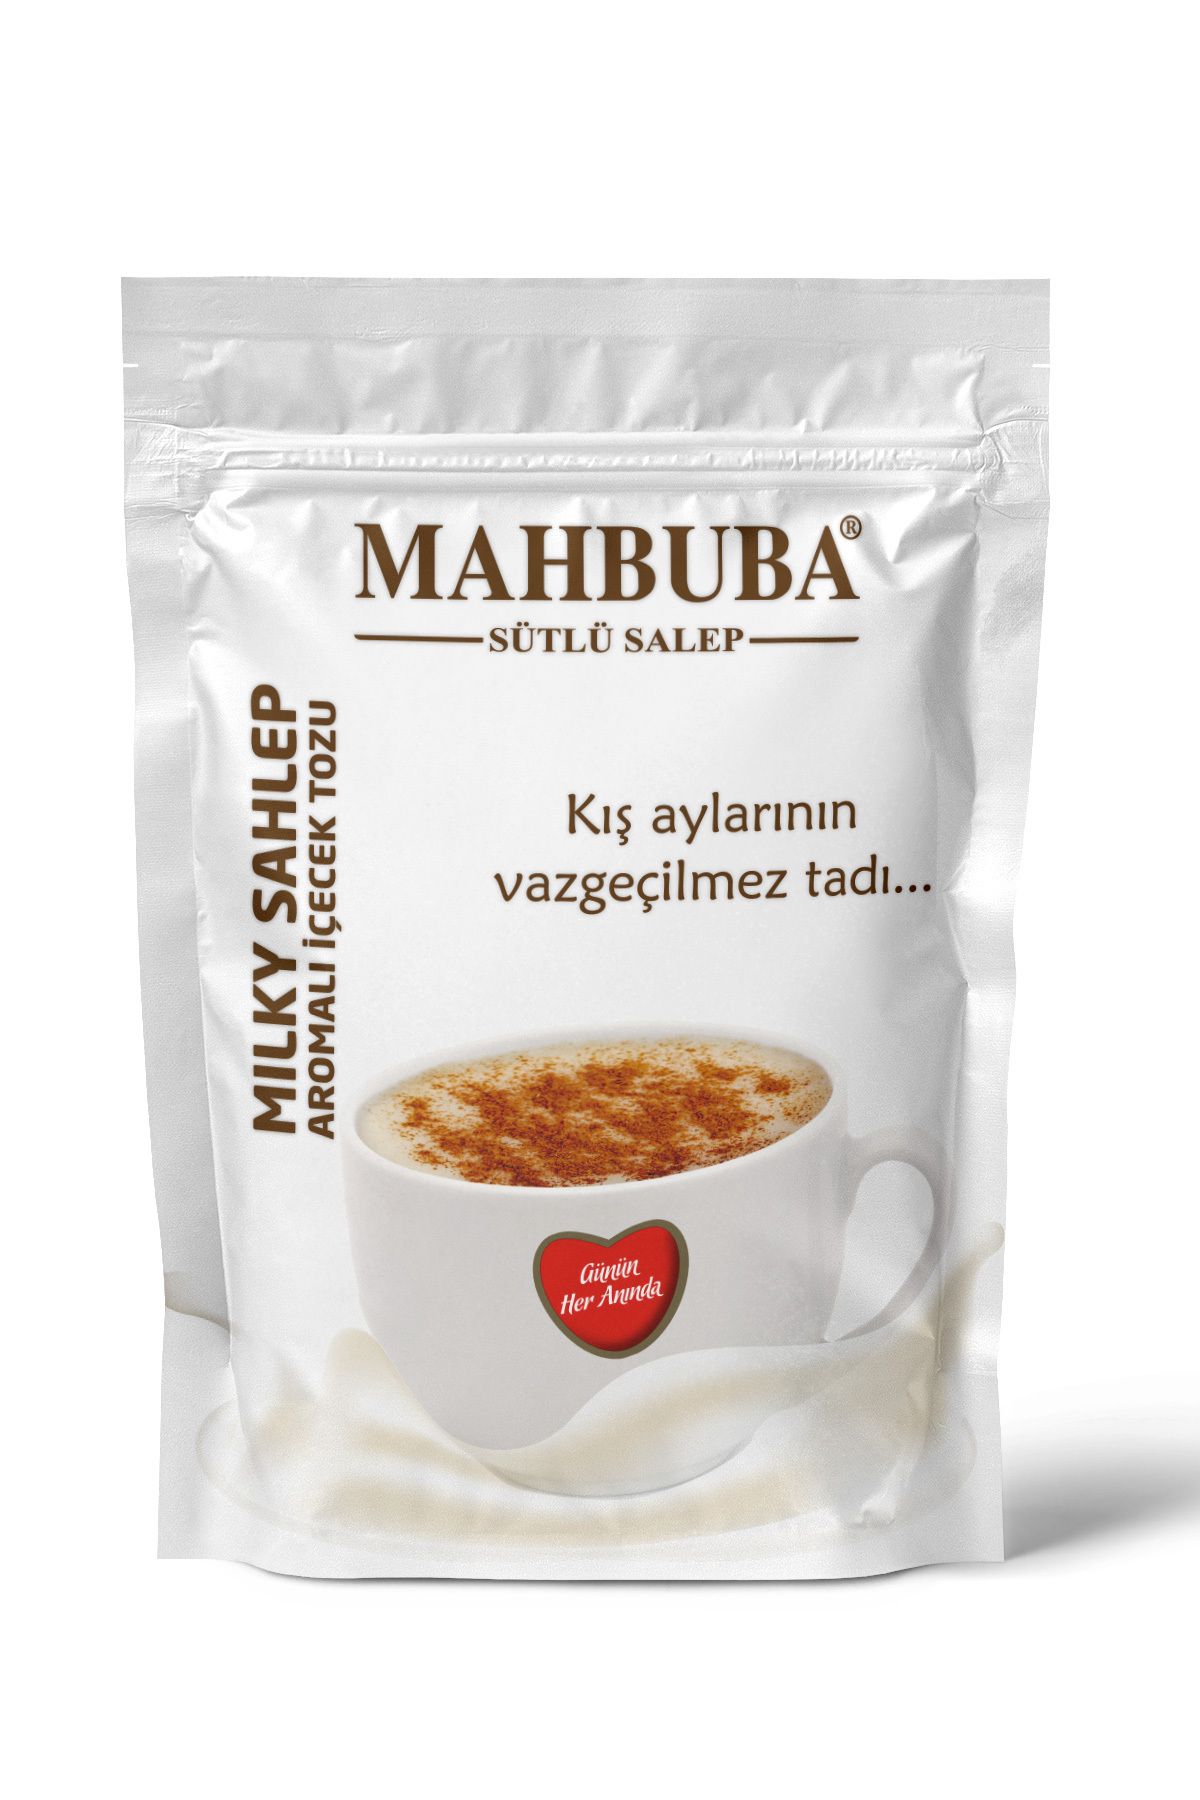 Mahbuba Sütlü Salep ( Sahlep ) 250gr